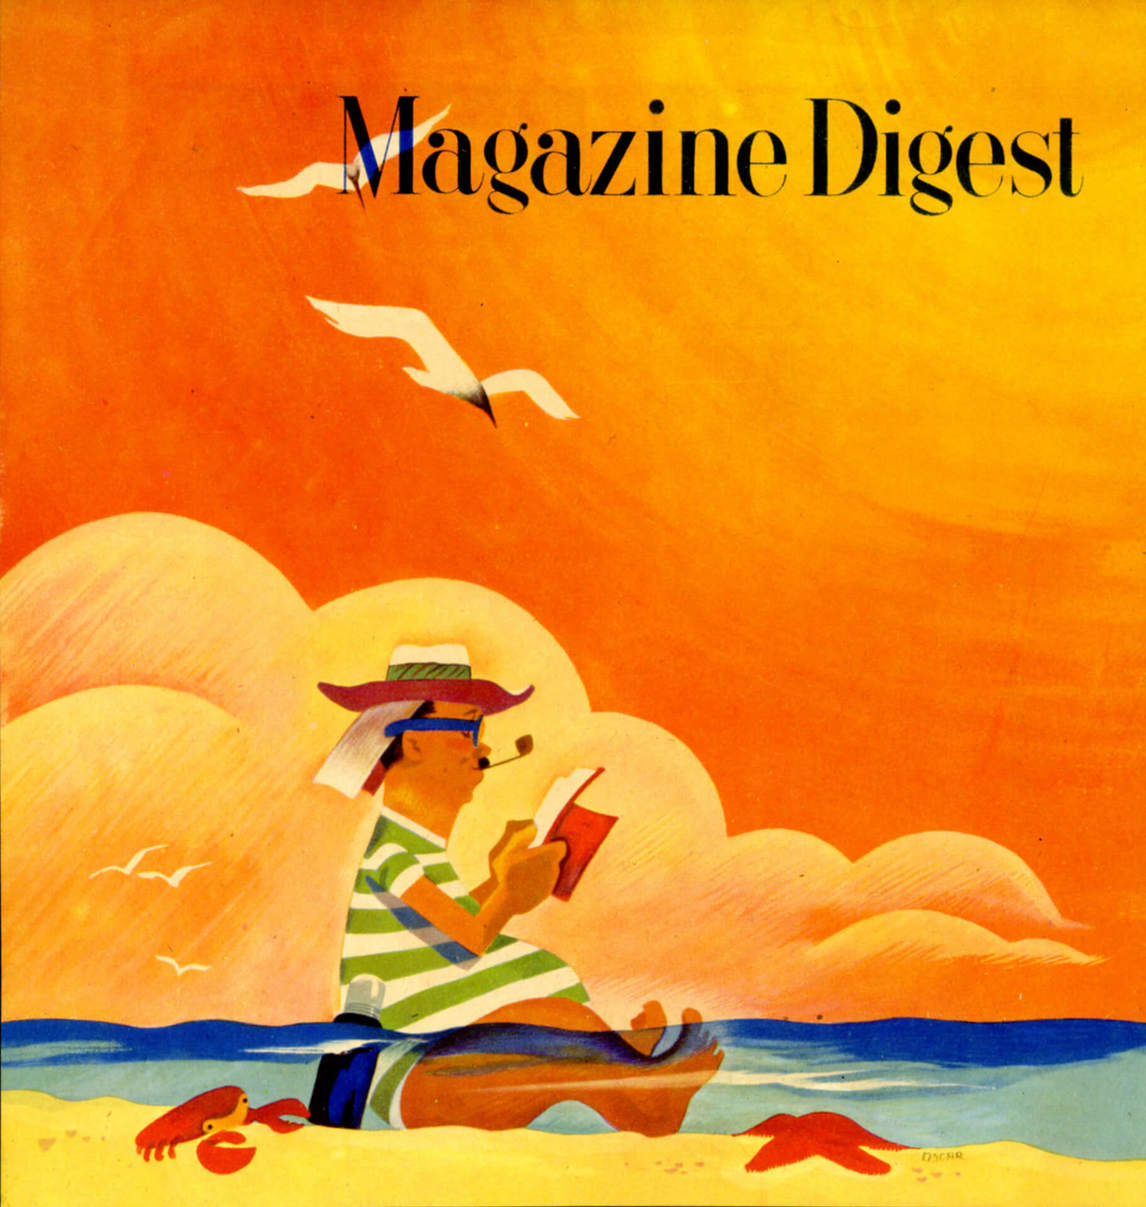 Art Canada Institute, Oscar Cahen, Magazine Digest cover design, c. 1946